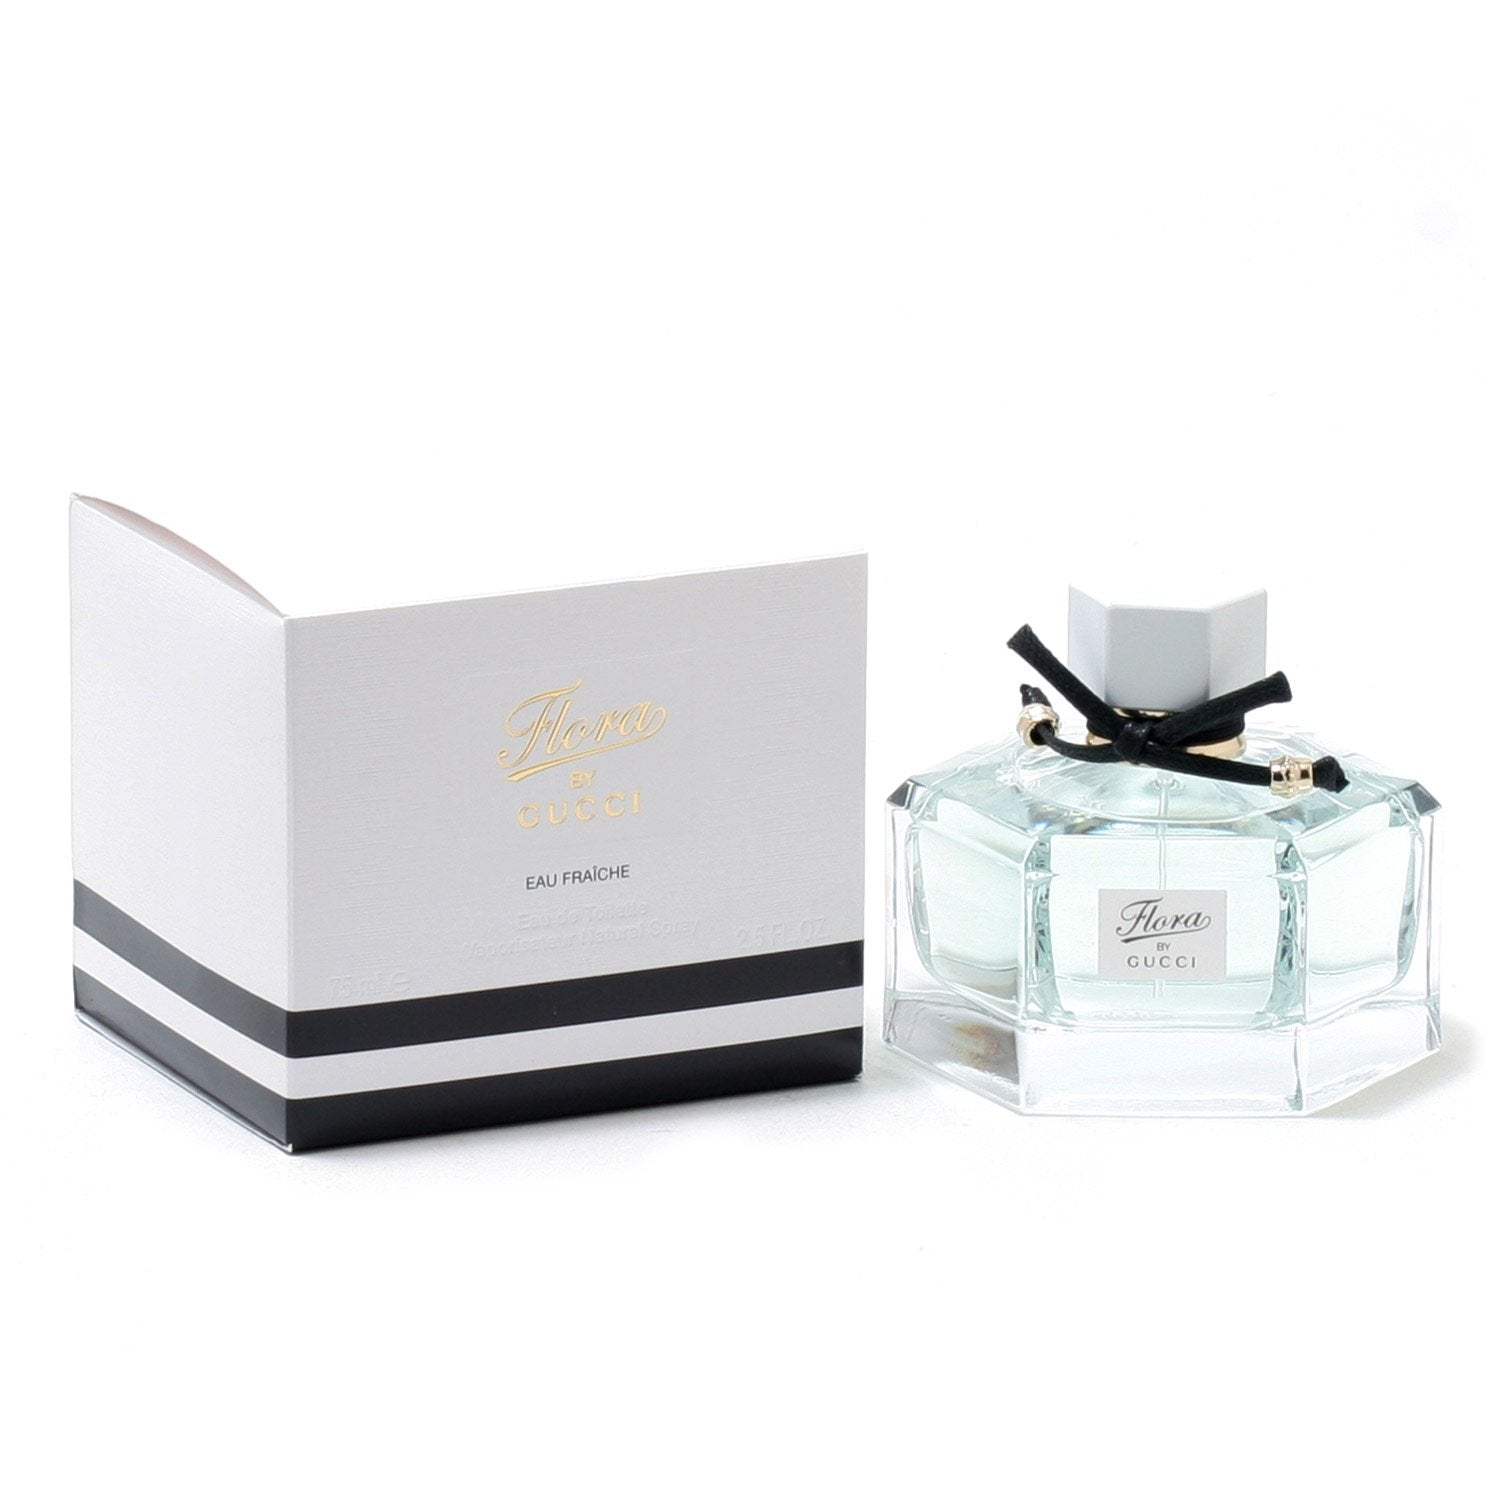 Perfume - GUCCI FLORA EAU FRAICHE FOR WOMEN - EAU DE TOILETTE SPRAY, 2.5 OZ